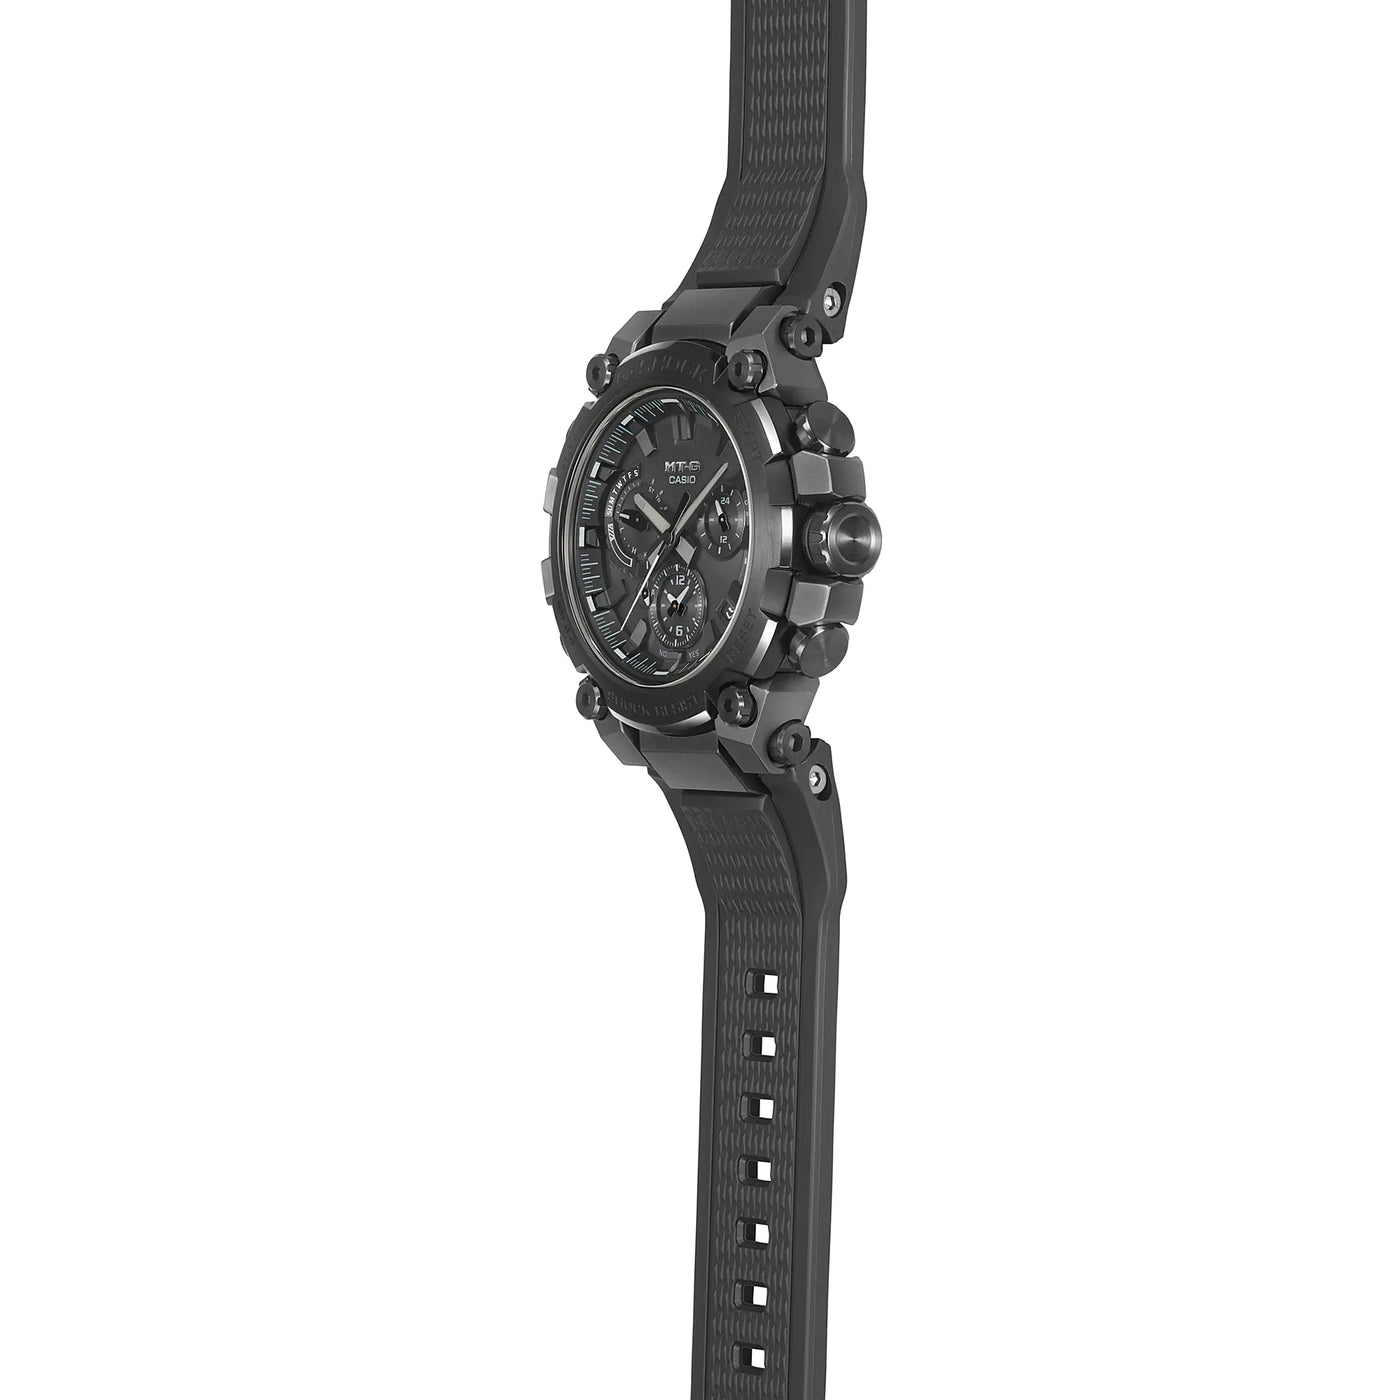 Orologio G-Shock MTG-B3000B-1AER acciaio e carbonio nero